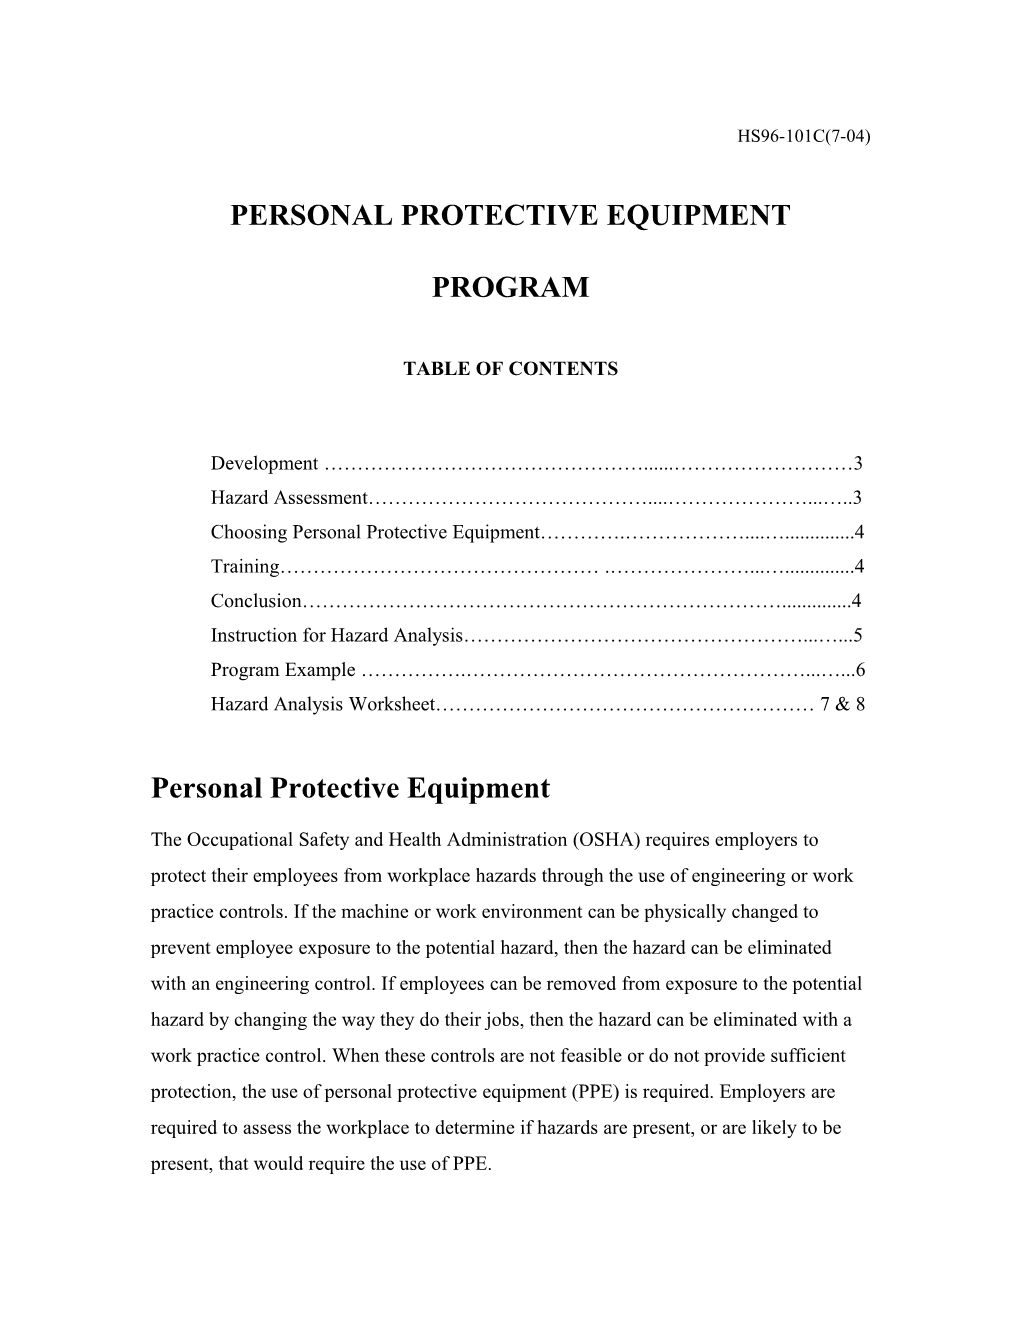 Personal Protective Equipment Program